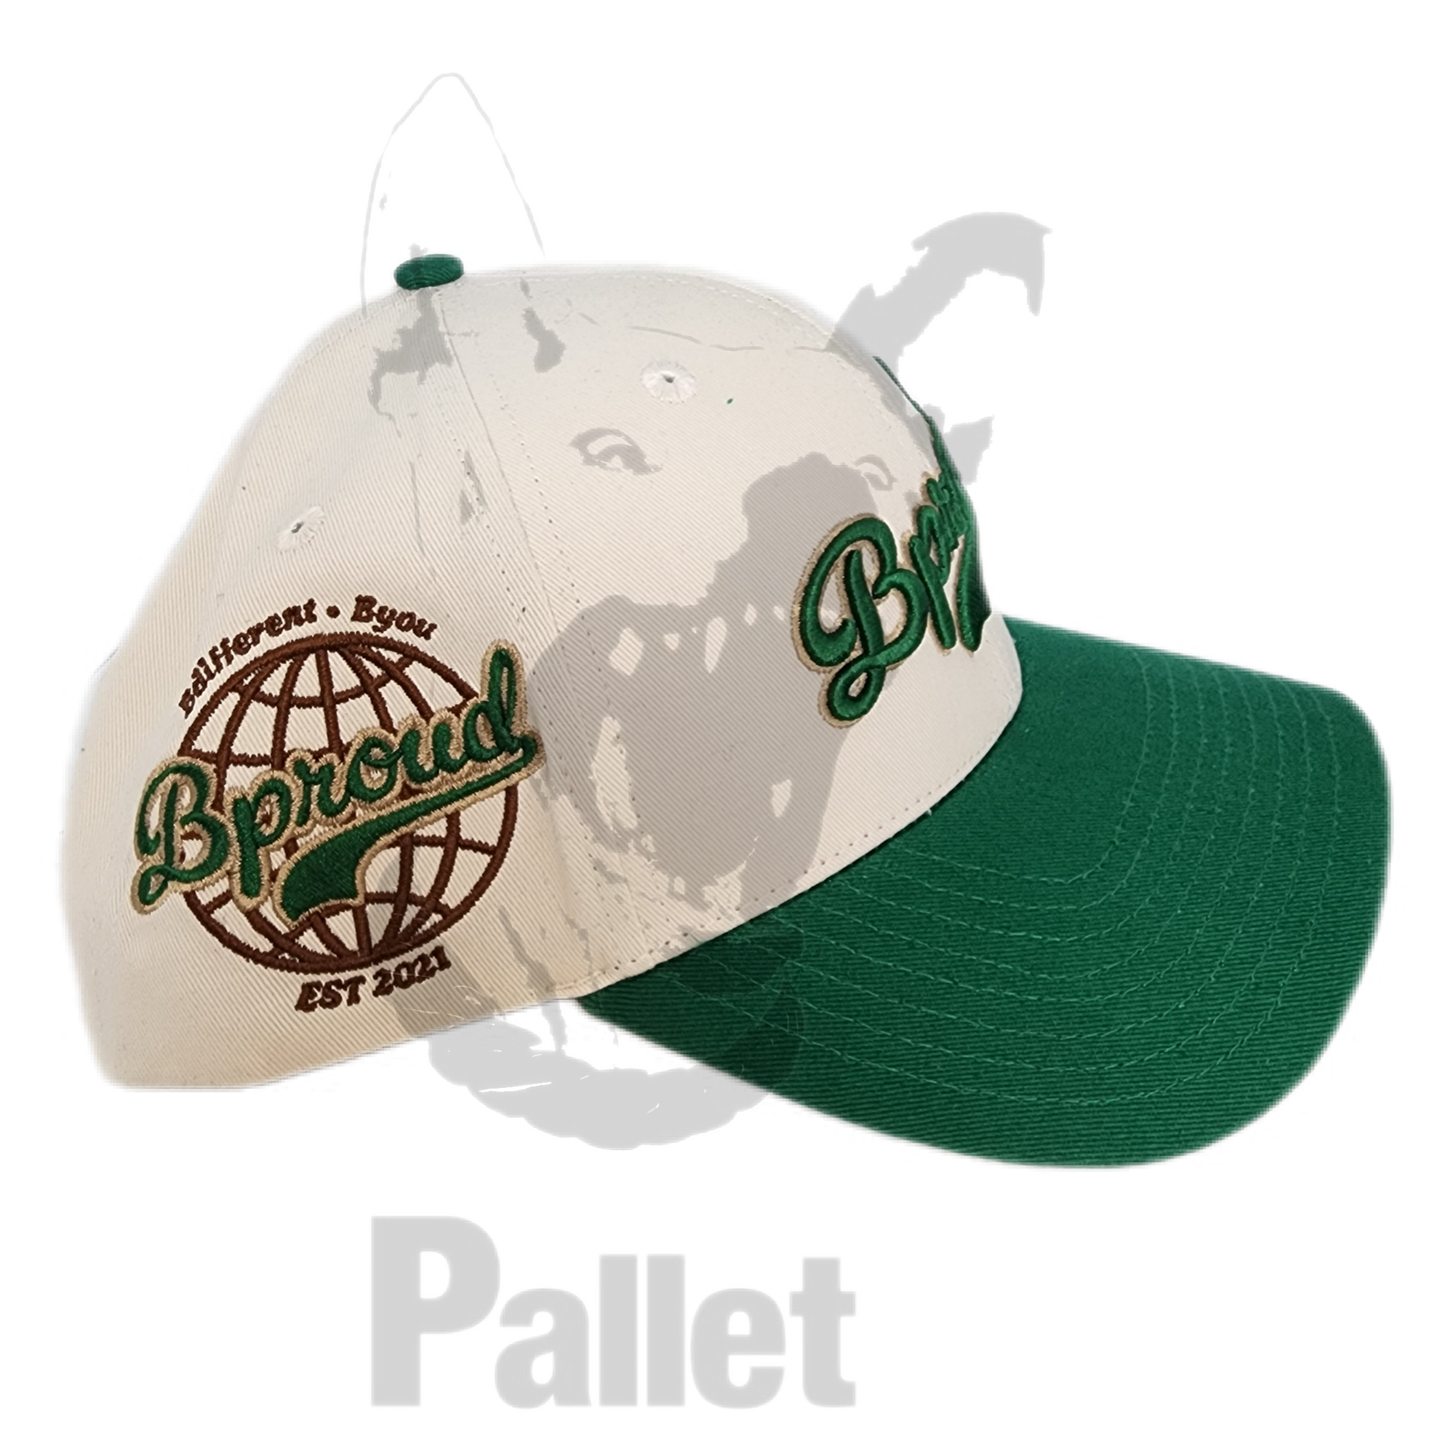 BProud - "Green Baseball Hats"